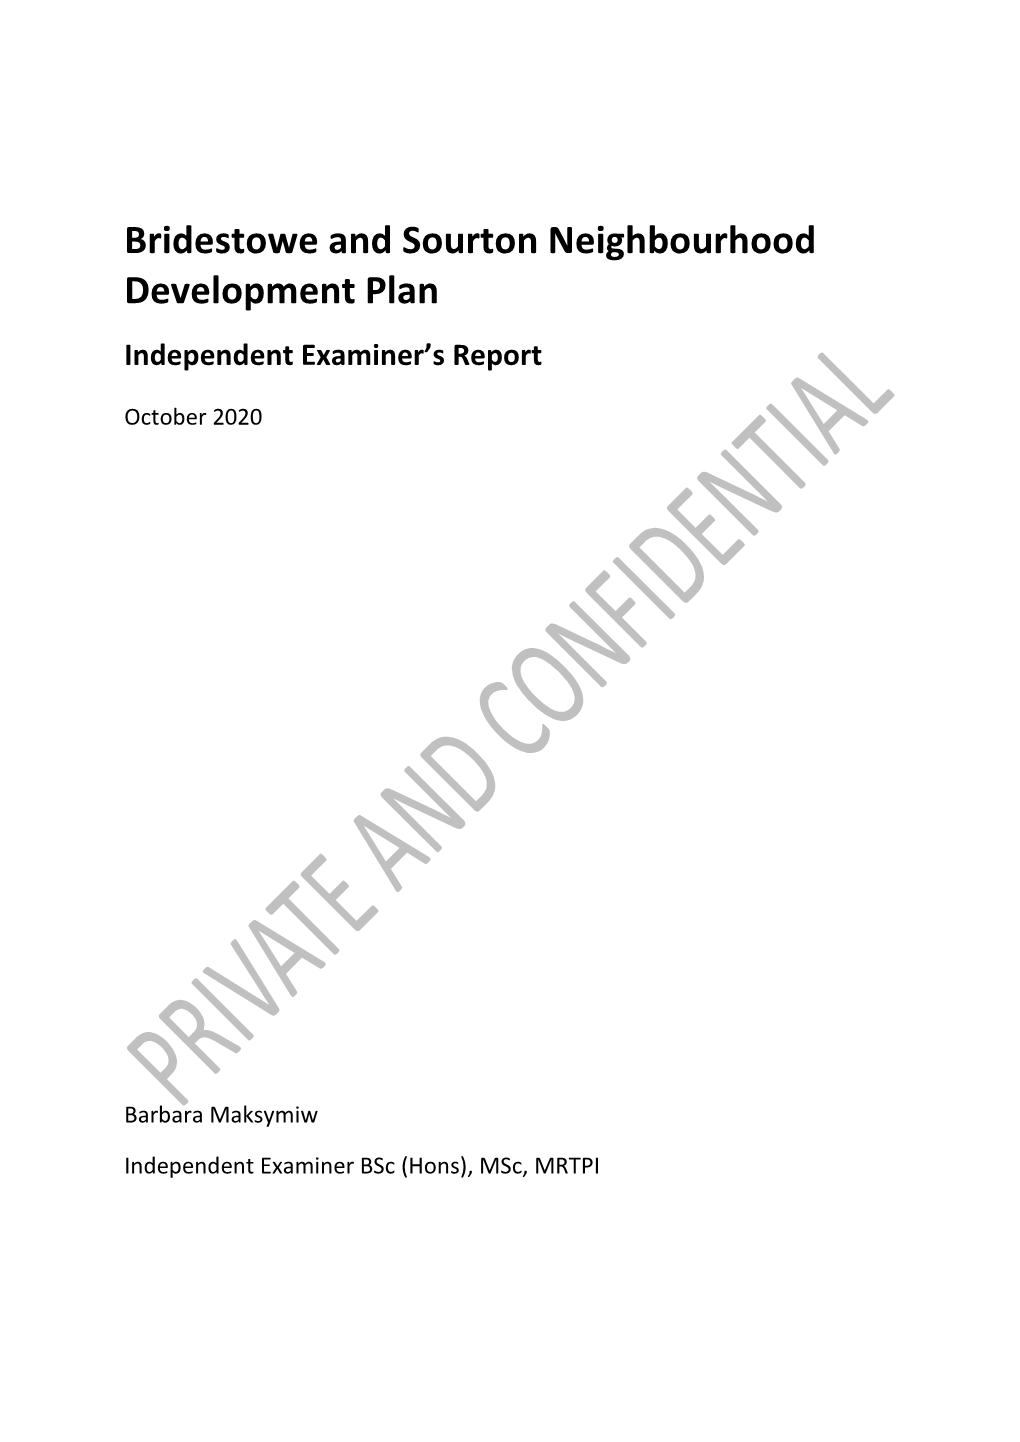 Bridestowe and Sourton Neighbourhood Development Plan Independent Examiner’S Report